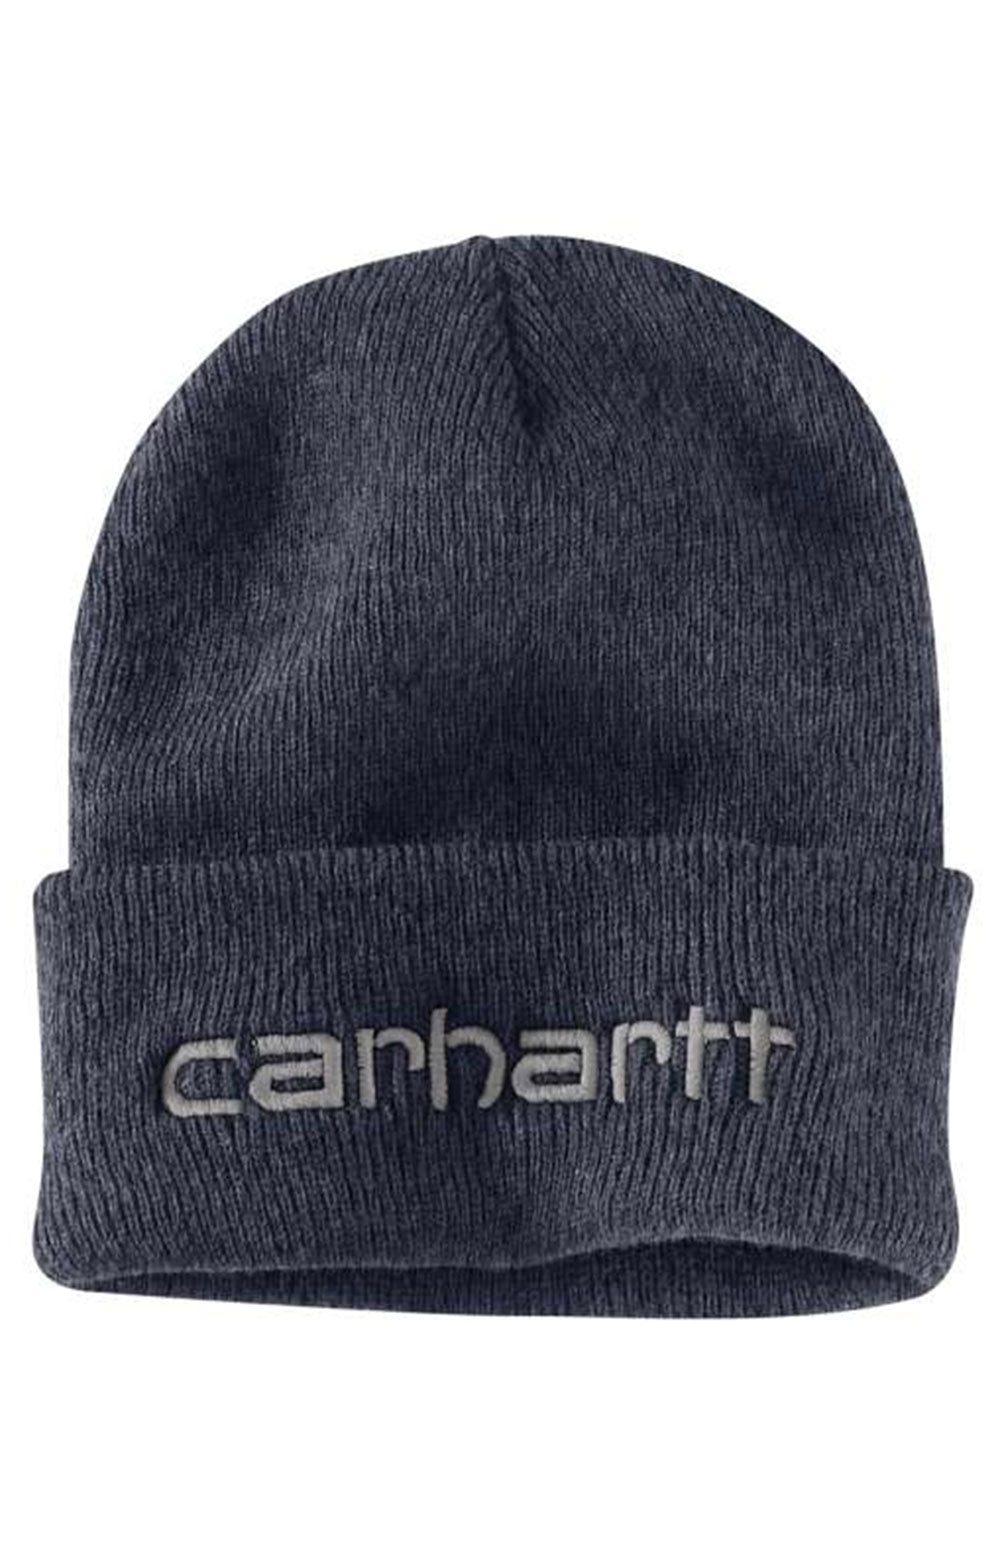 Carhartt Teller Hat Embroidered Logo (Coal Heather)